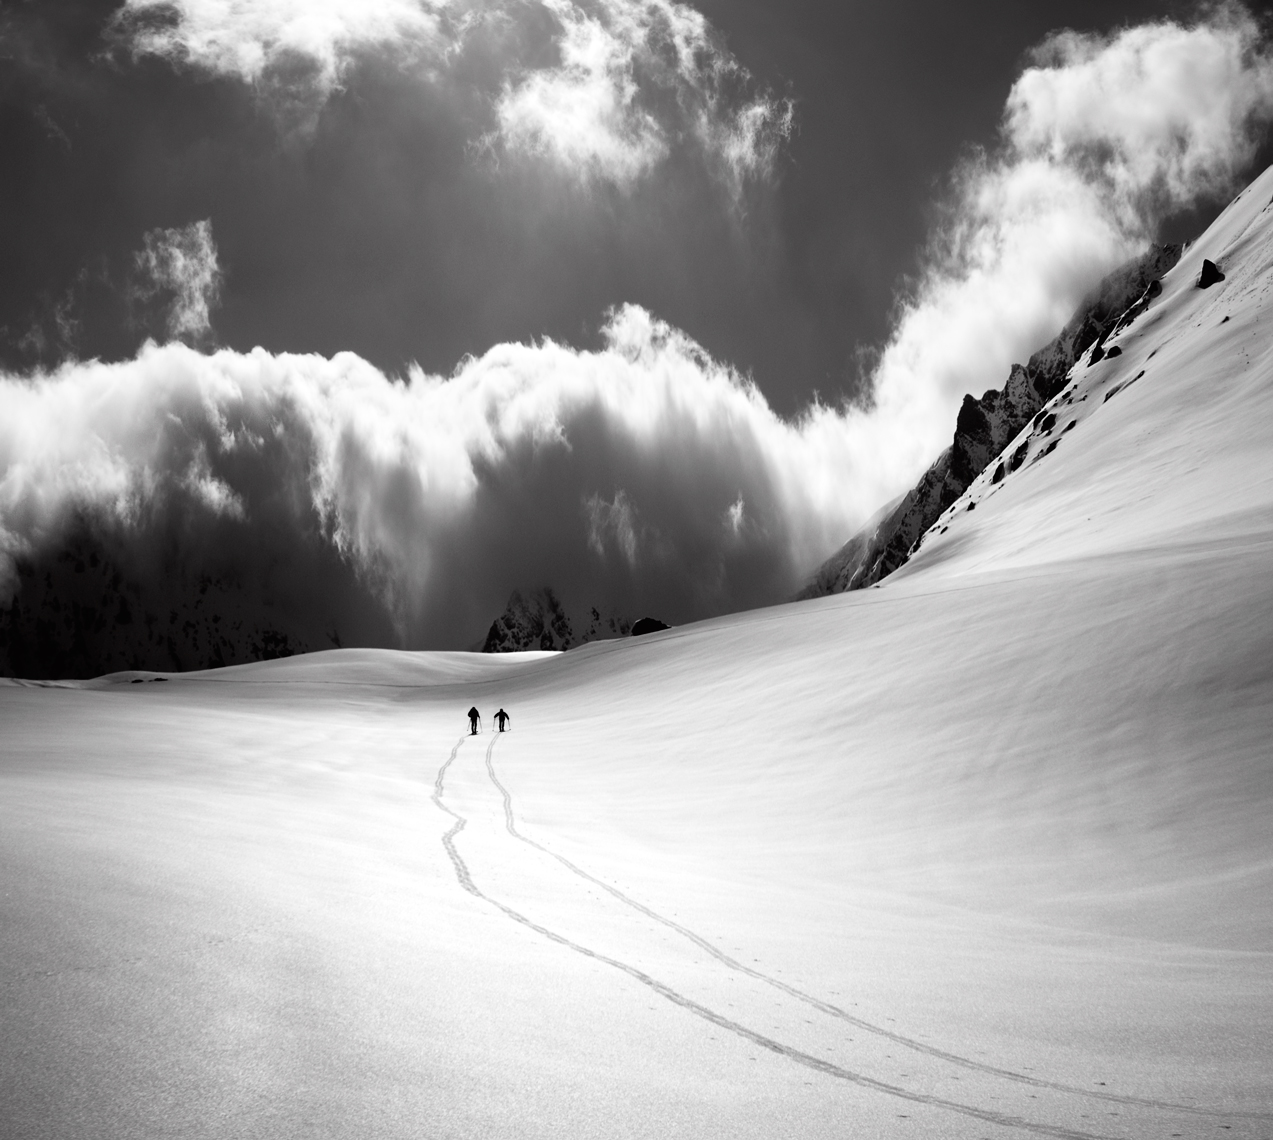 Jon Wyatt Photography - Ski touring in backcountry near Sainte Foy Tarentaise, France